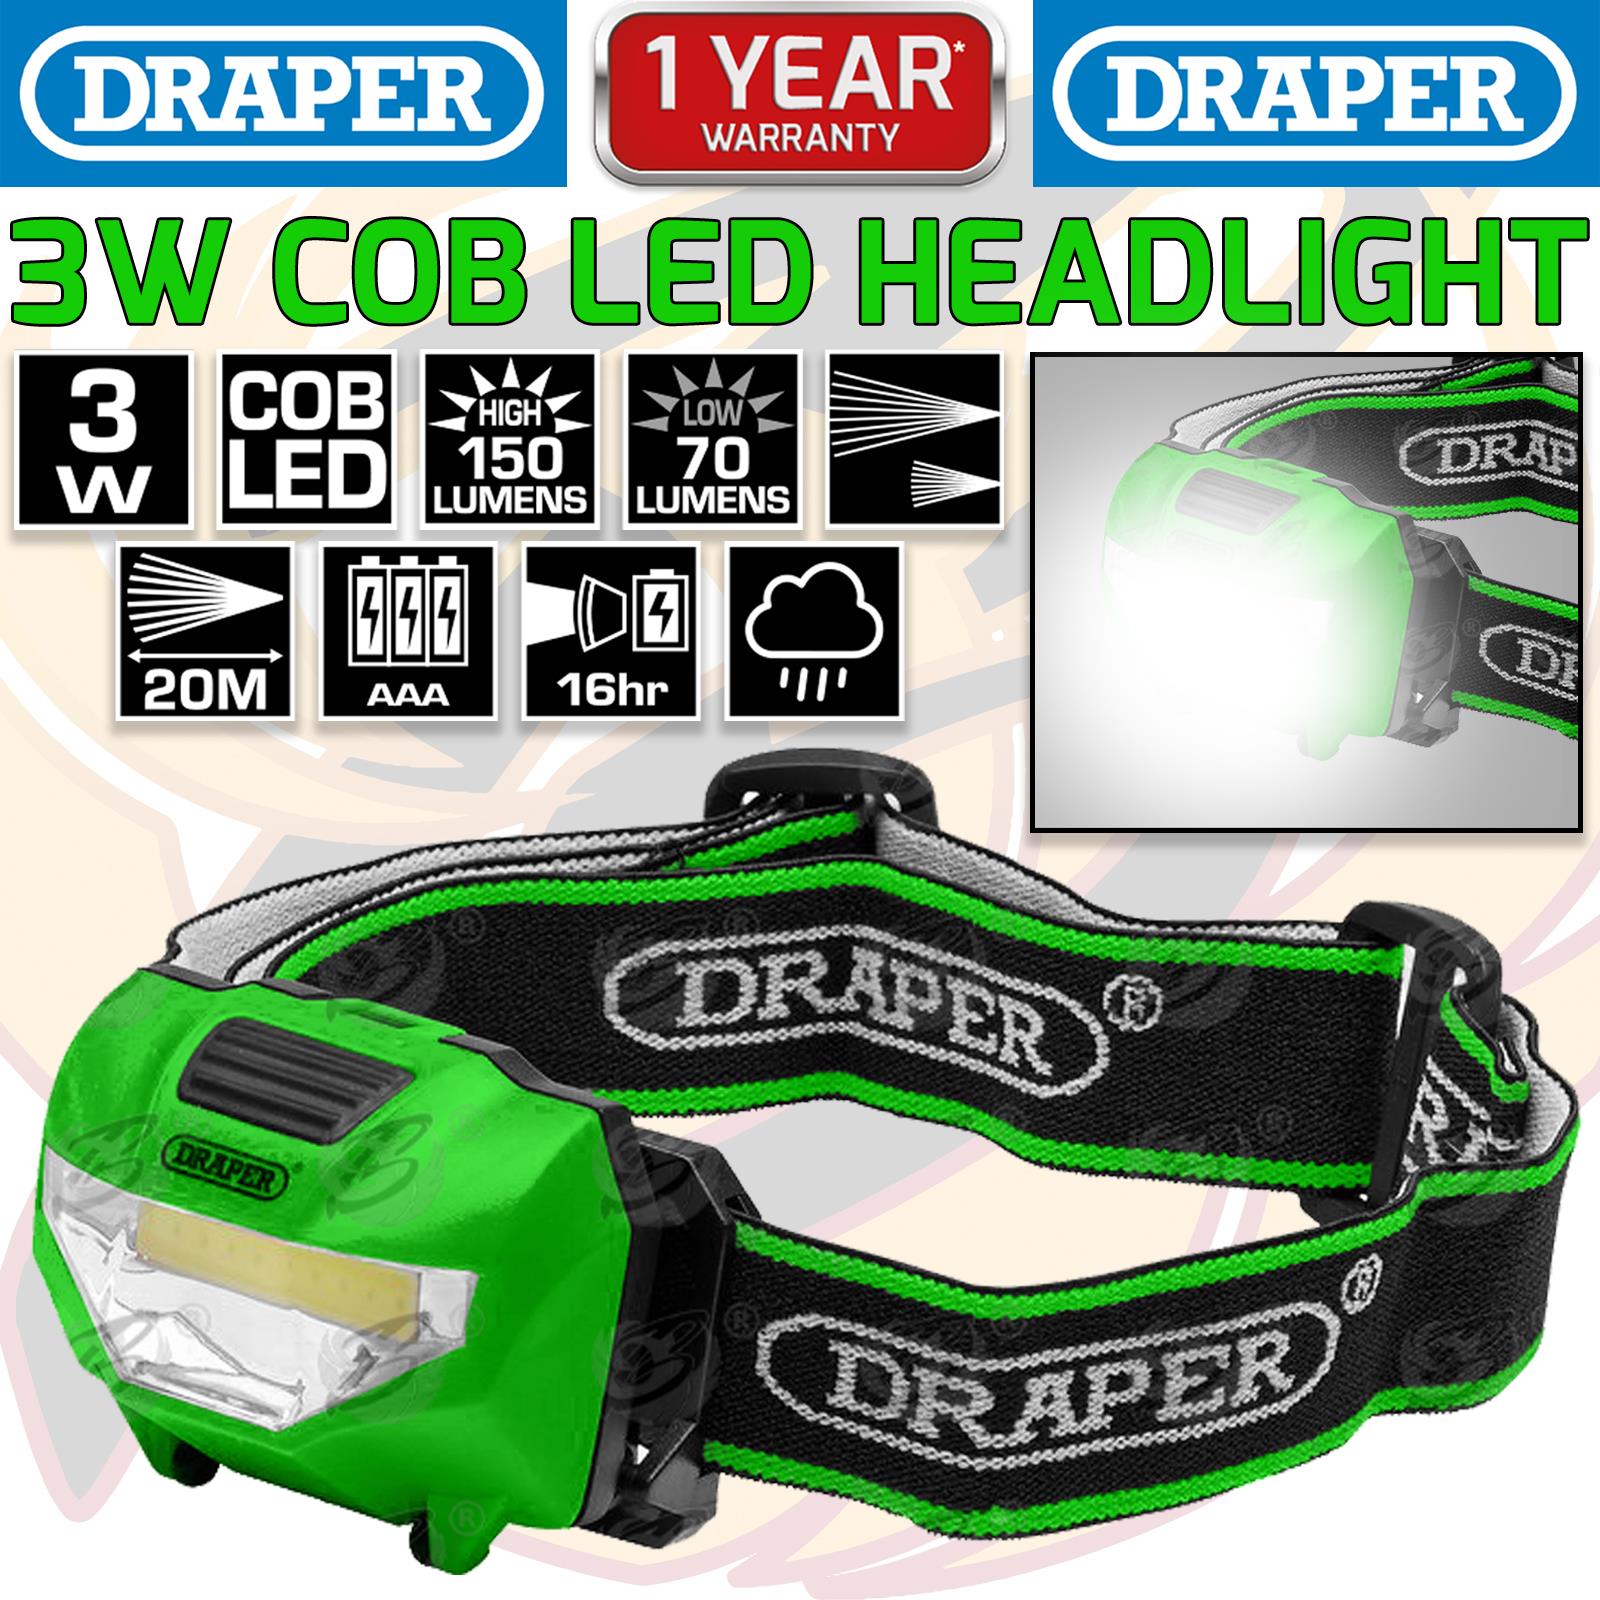 DRAPER COB LED HEADLIGHT ( GREEN )